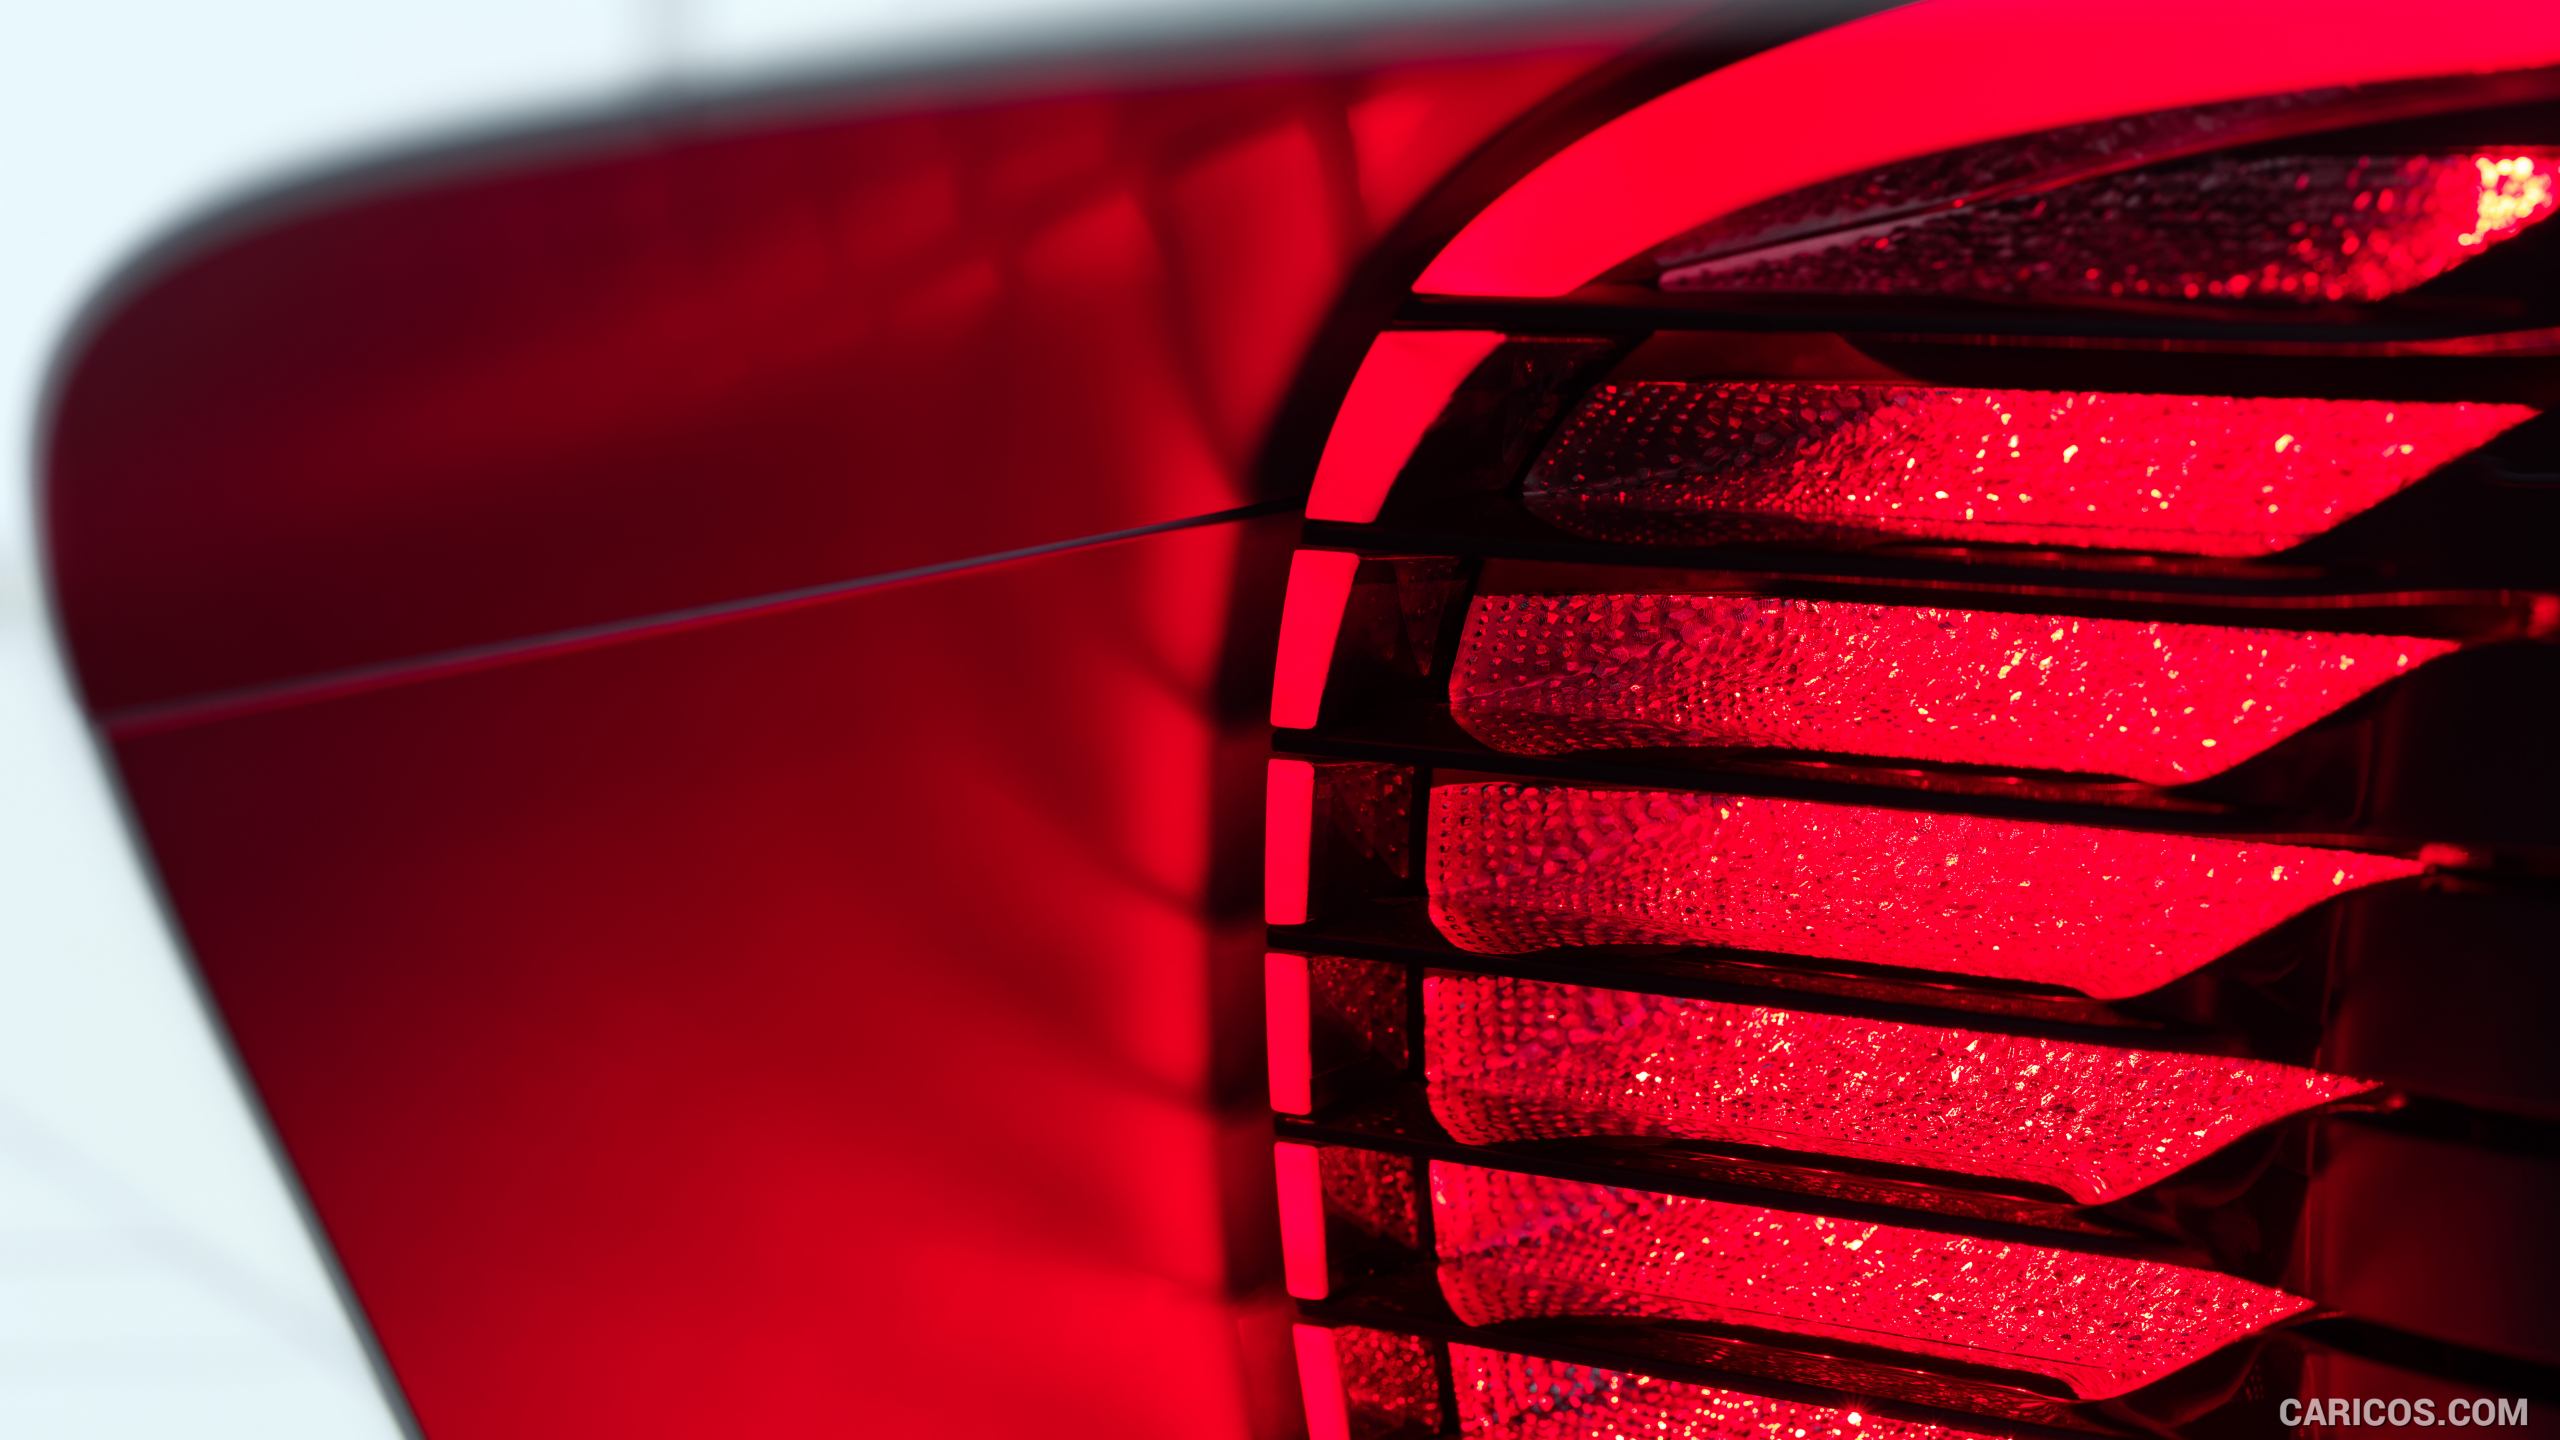 2015 Mercedes-Benz Concept IAA (Intelligent Aerodynamic Automobile) - Tail Light, #32 of 49